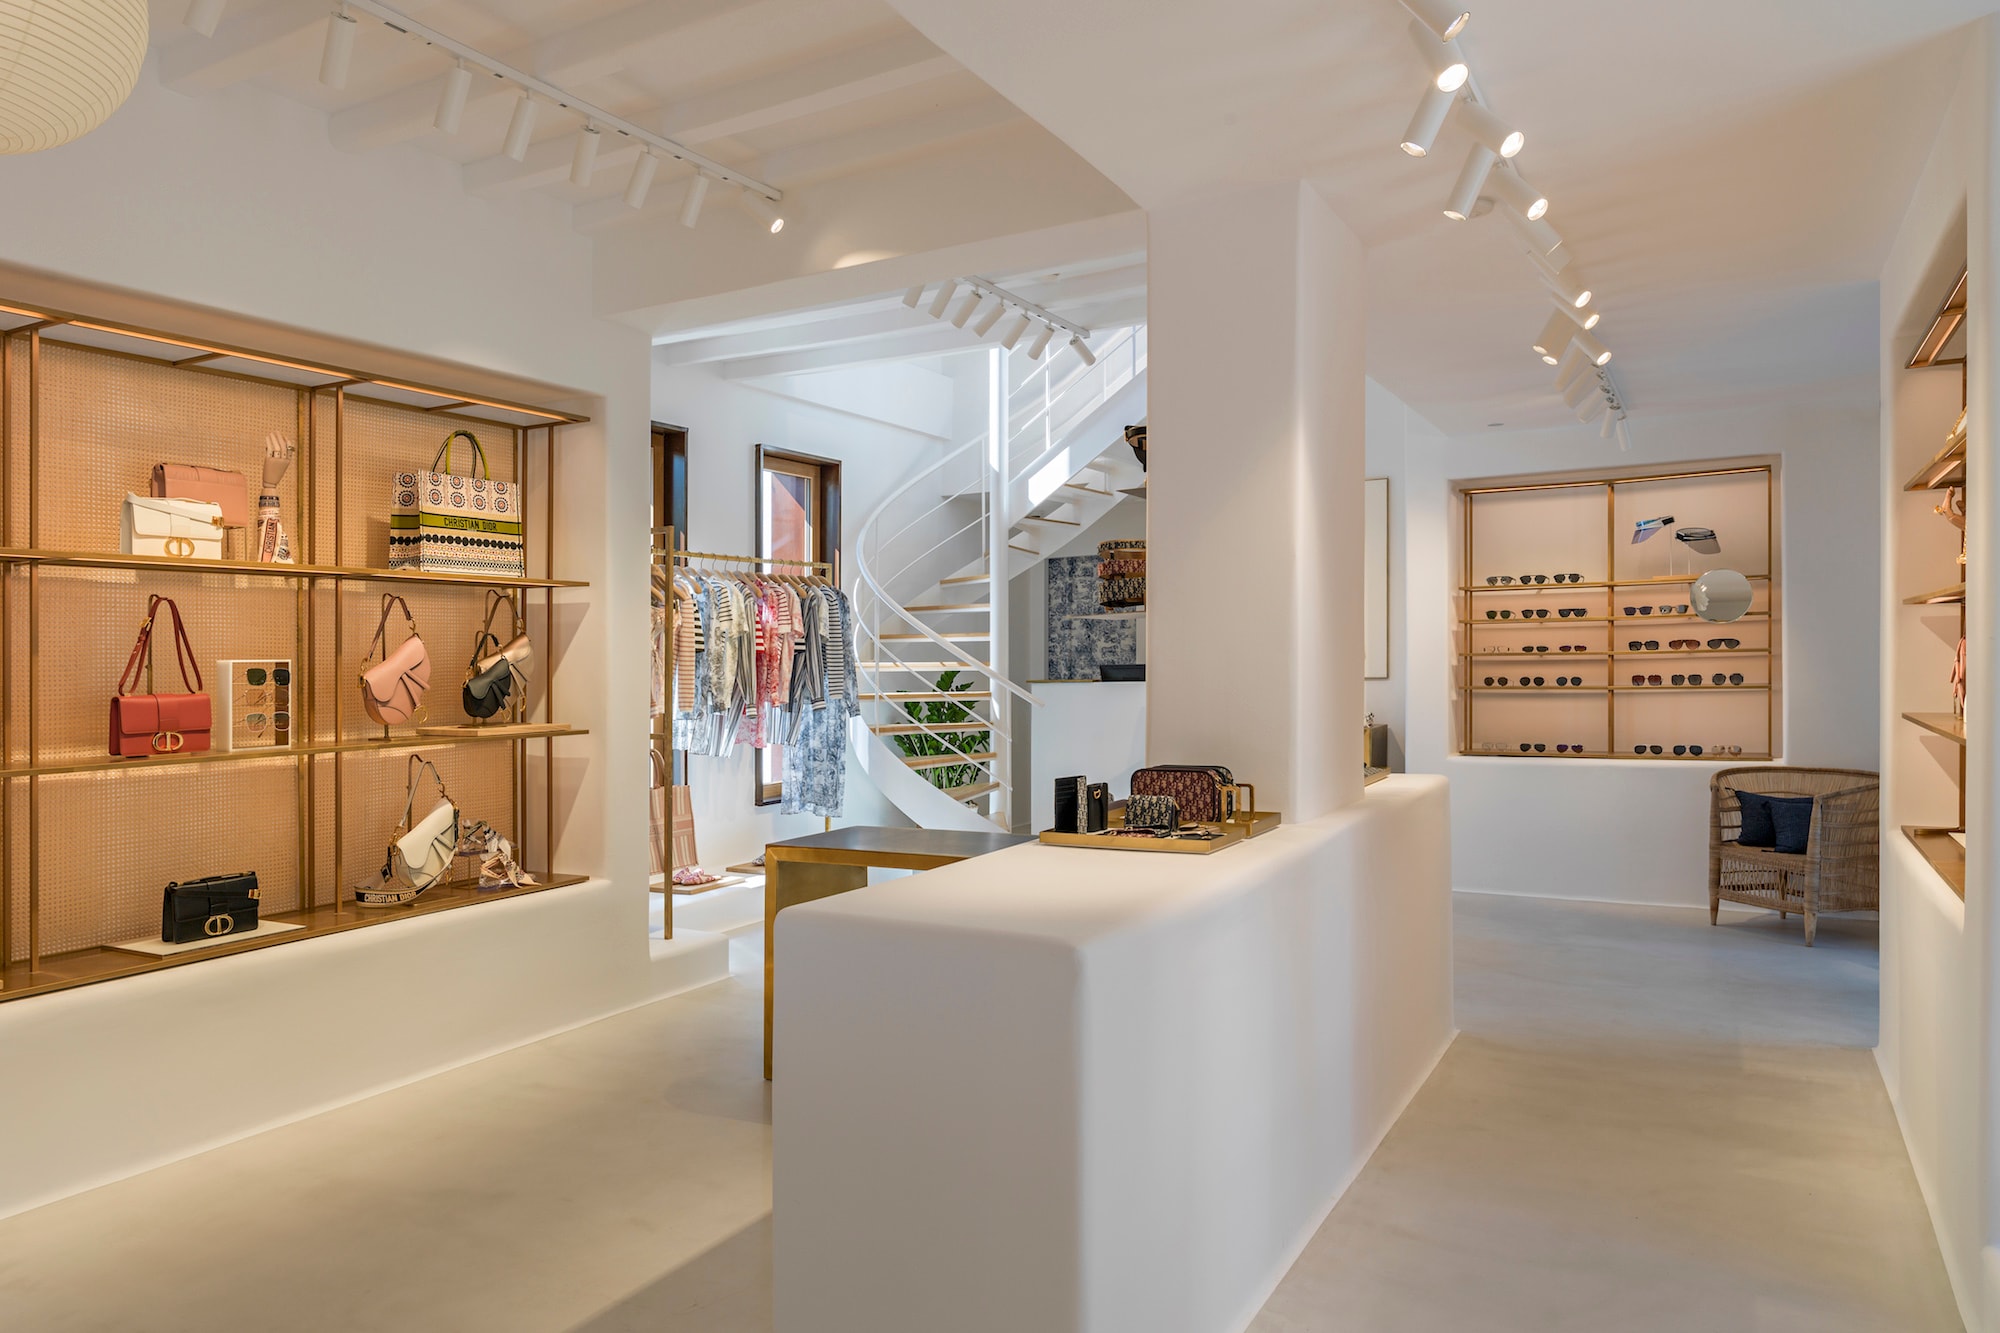 Dior Opens "Dioriviera" Mykonos Pop-Up Store Shop Collection Maria Grazia Chiuri Kim Jones Collection Fashion Greece 